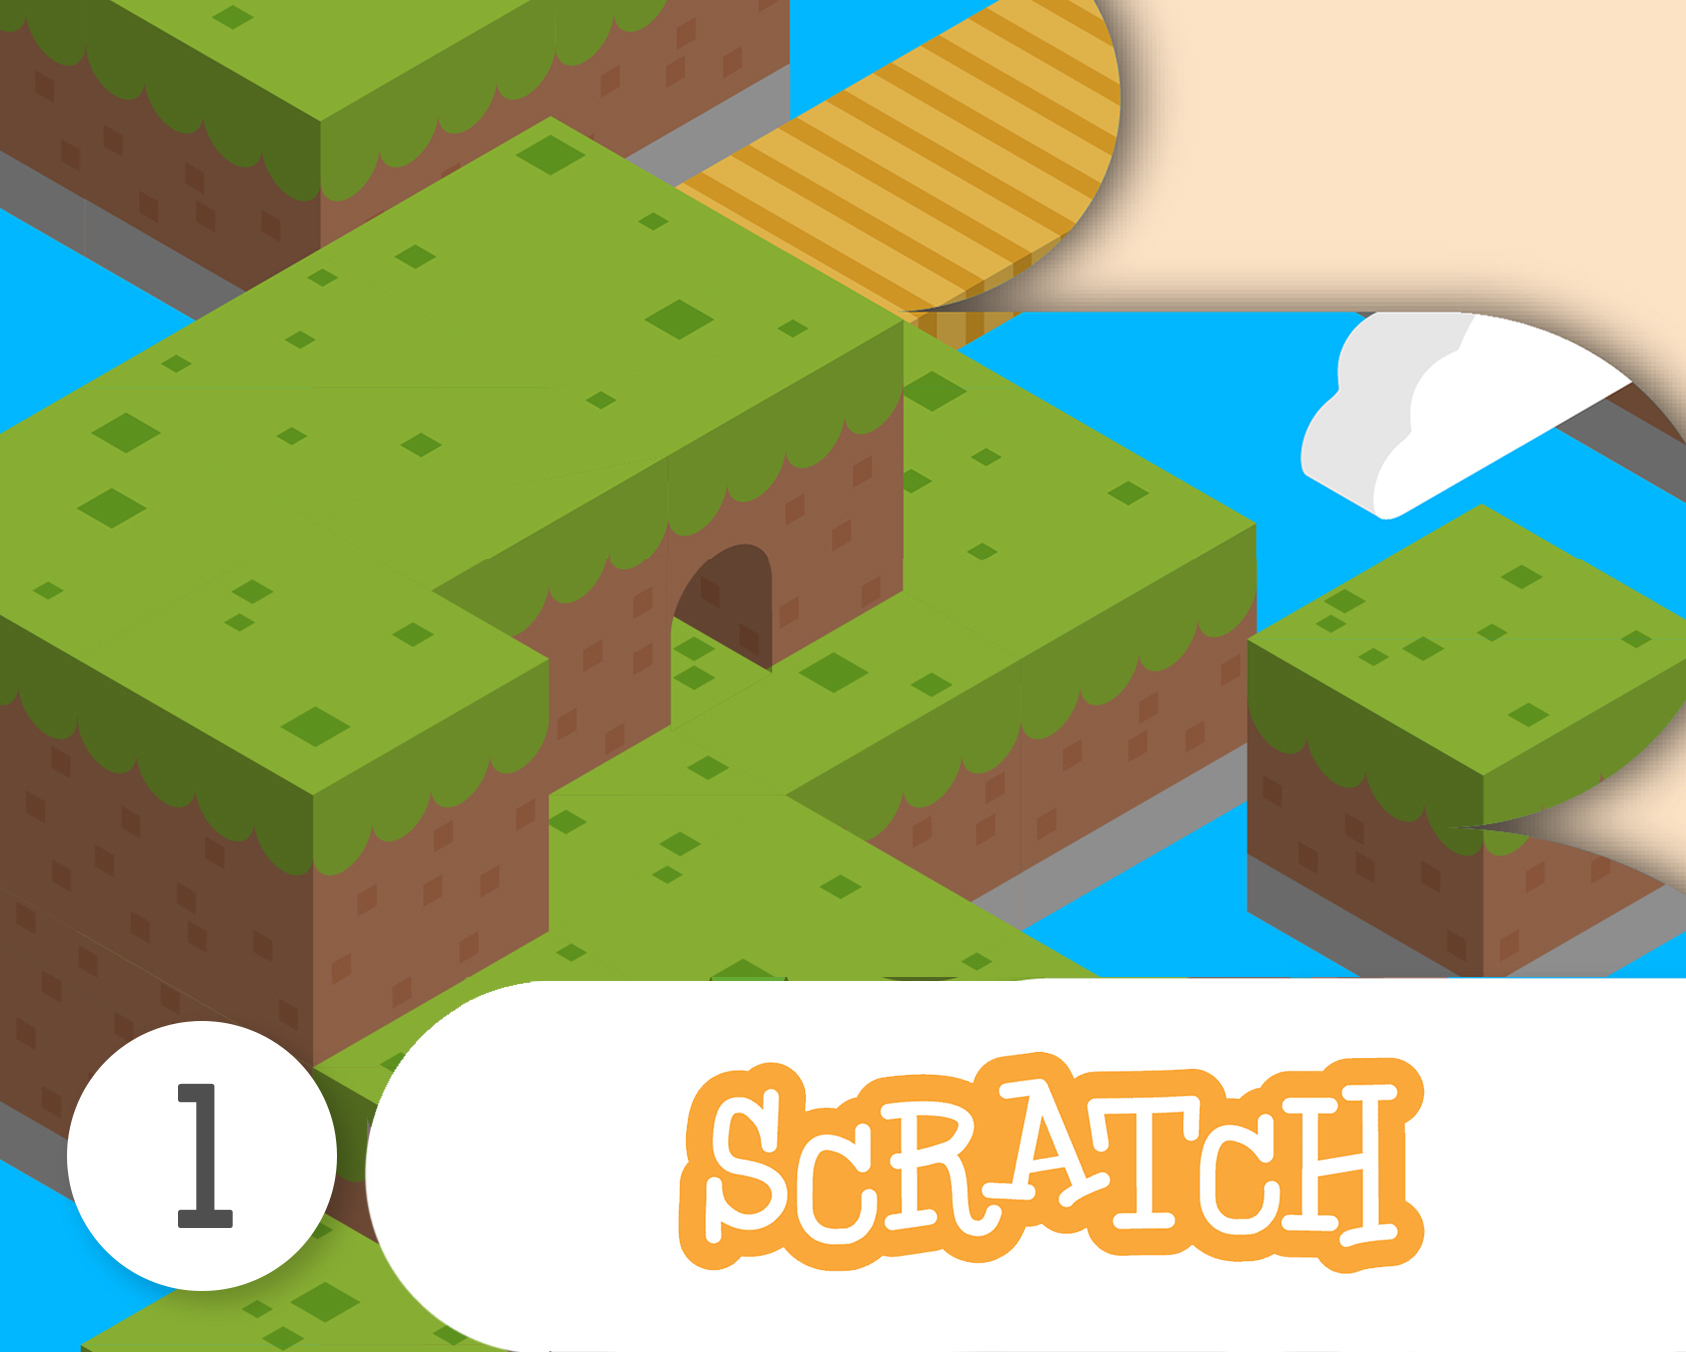 Programi i računarske igre 1. semestar (Scratch)